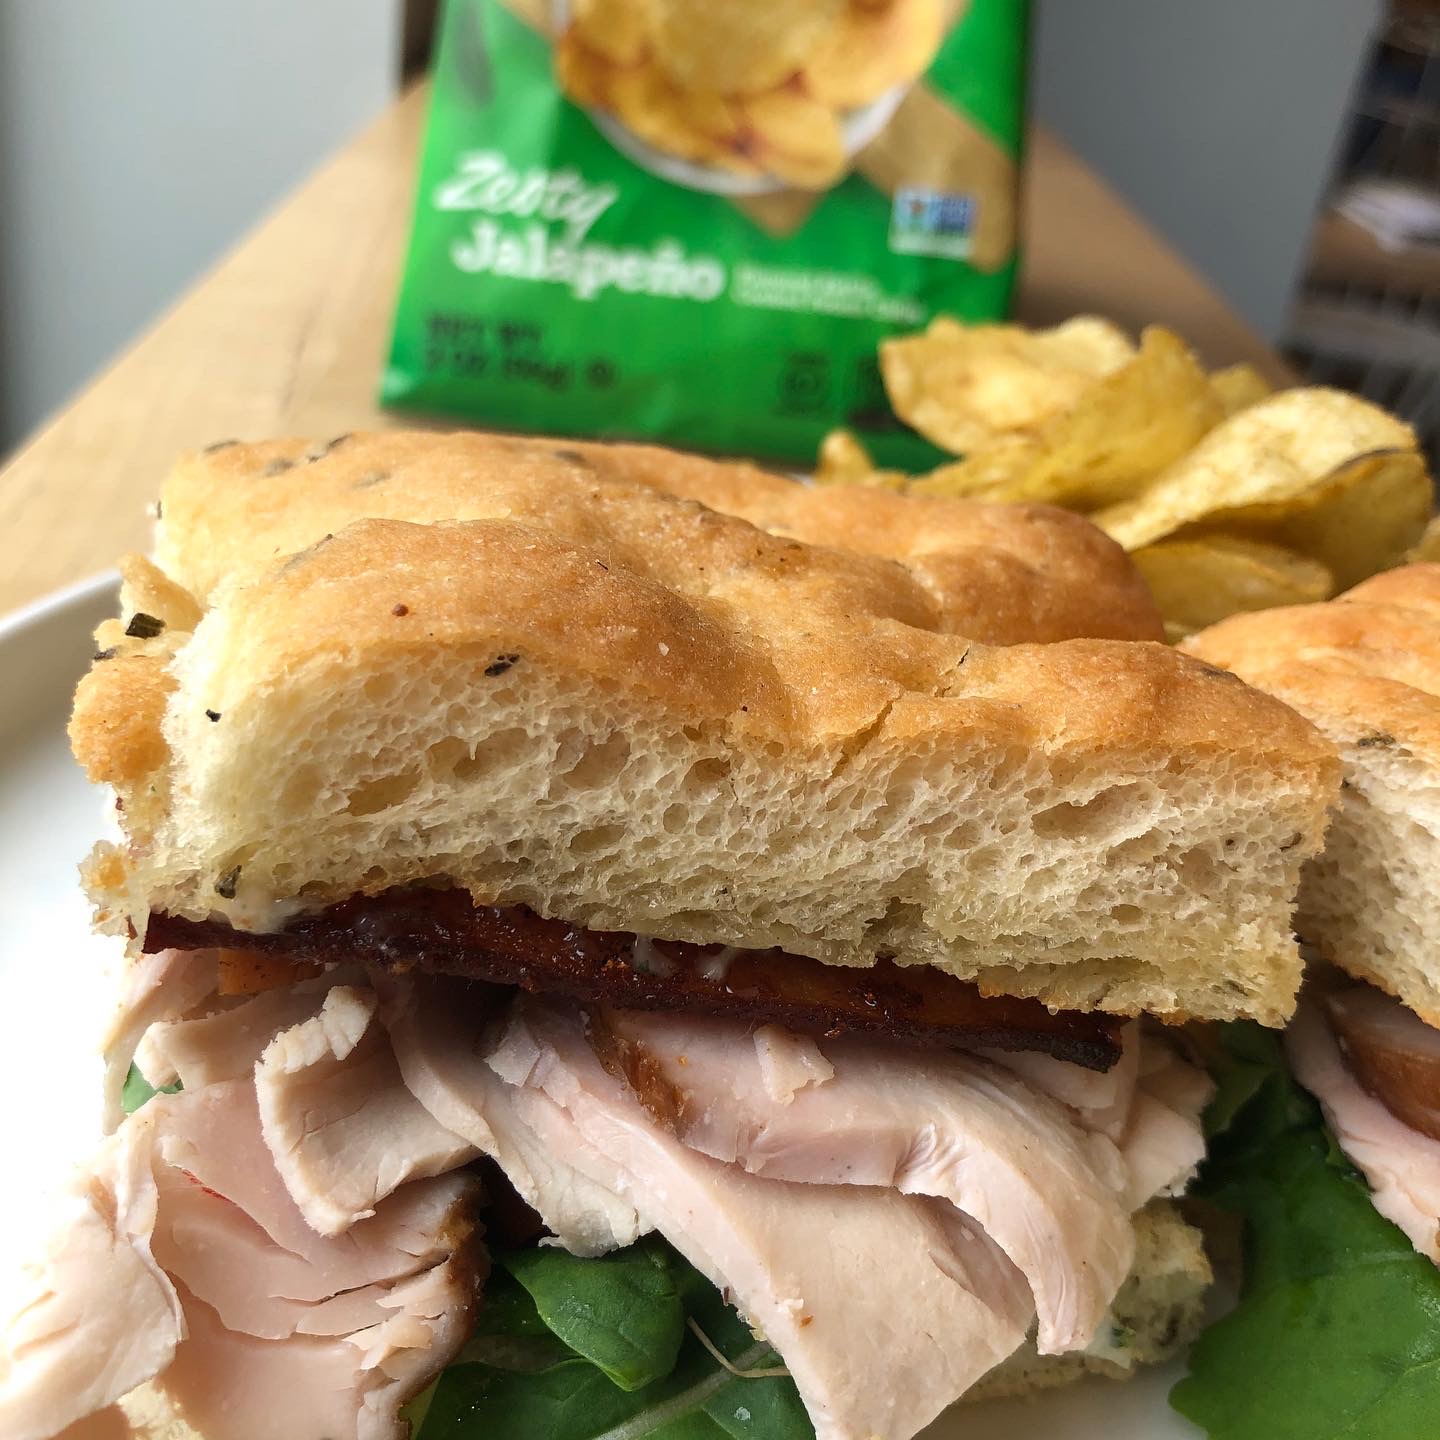 Turkey club sandwich and chips